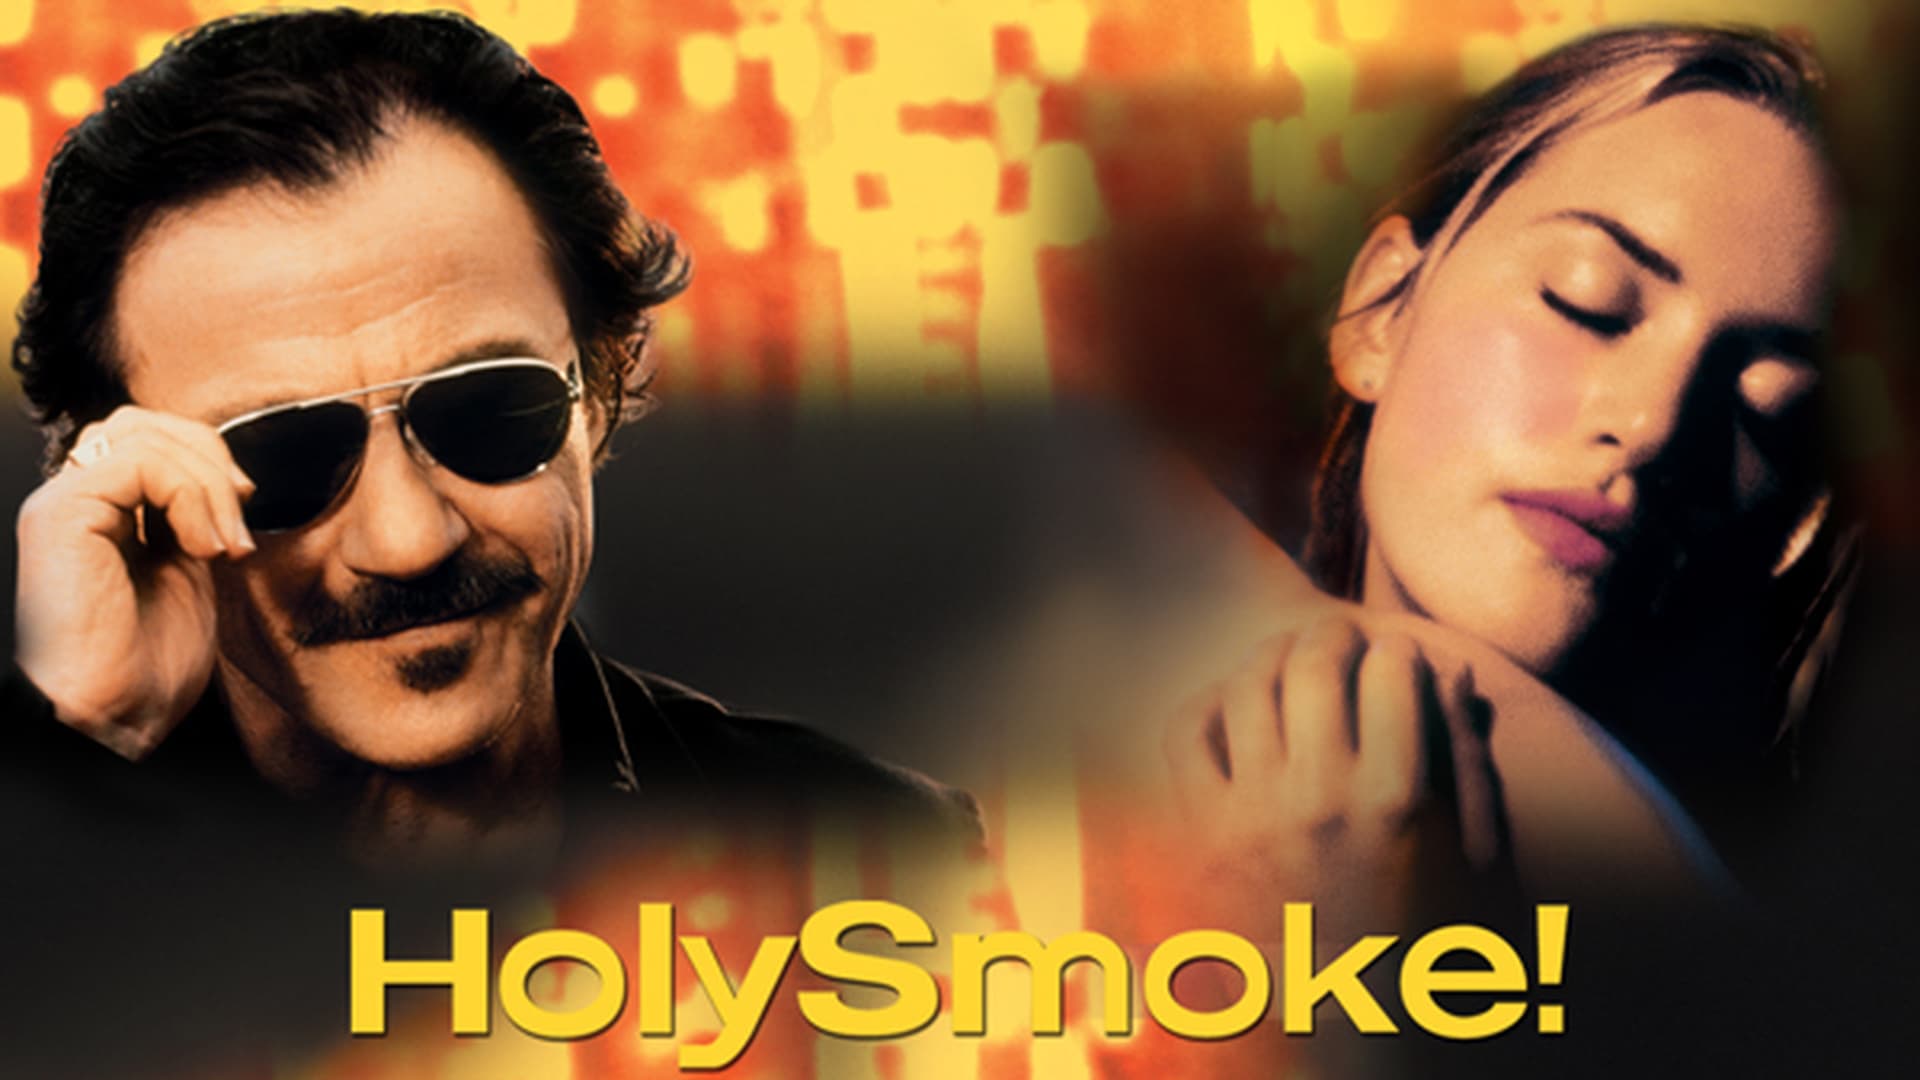 Holy smoke 1999 full movie watch online free